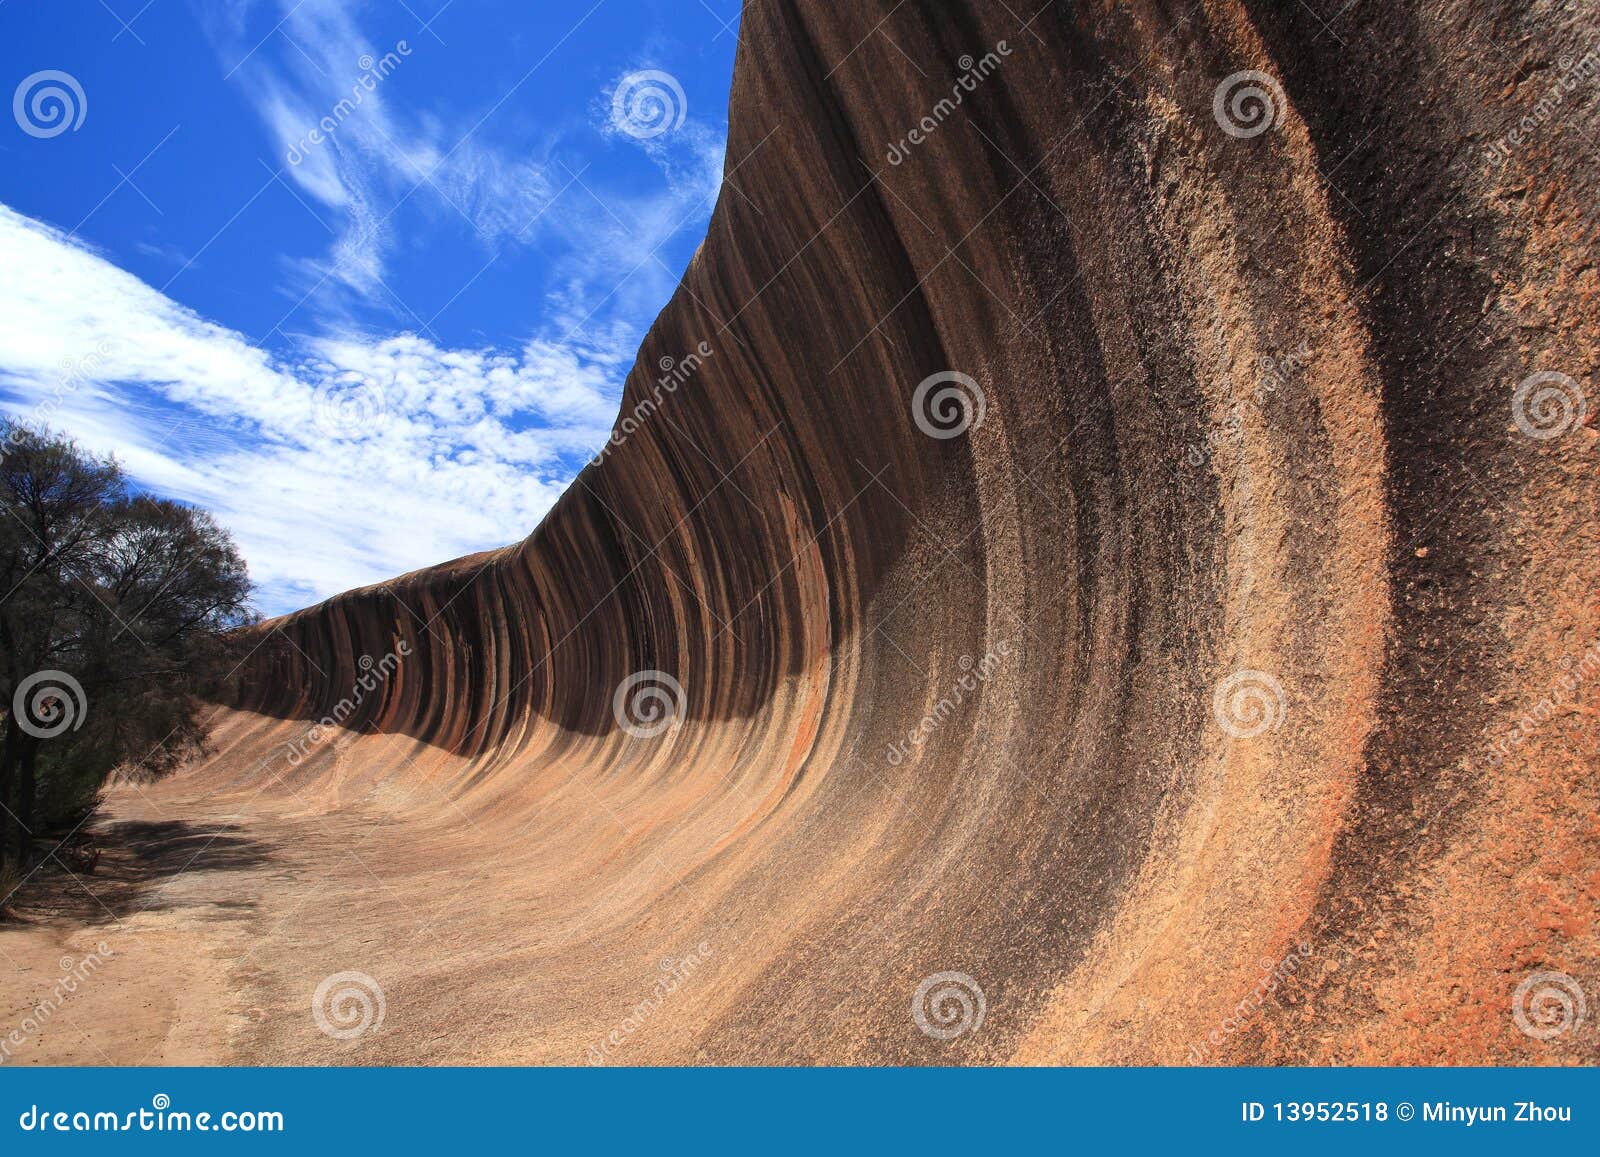 wave rock,western australia